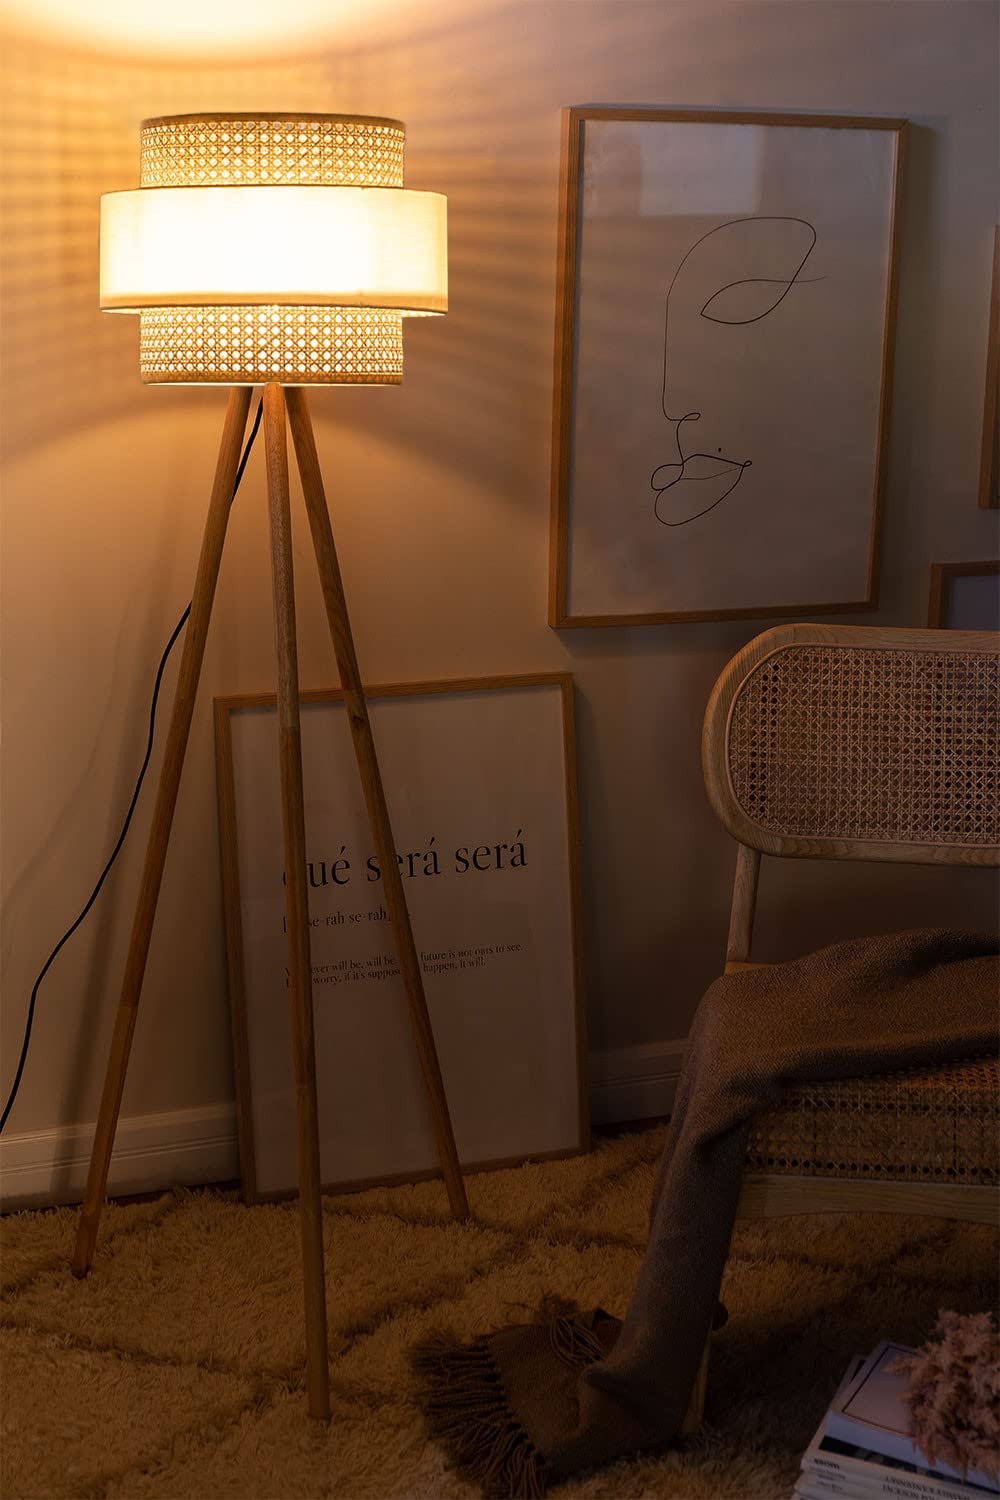 AKWAY Rattan Cane Webbing Floor Lamp Bamboo Floor Lamp Cane Floor Lamp Standing Lamp Wooden Standing lamp for Living Room Bedroom (14" D X 11") (Sky Blue) - Akway